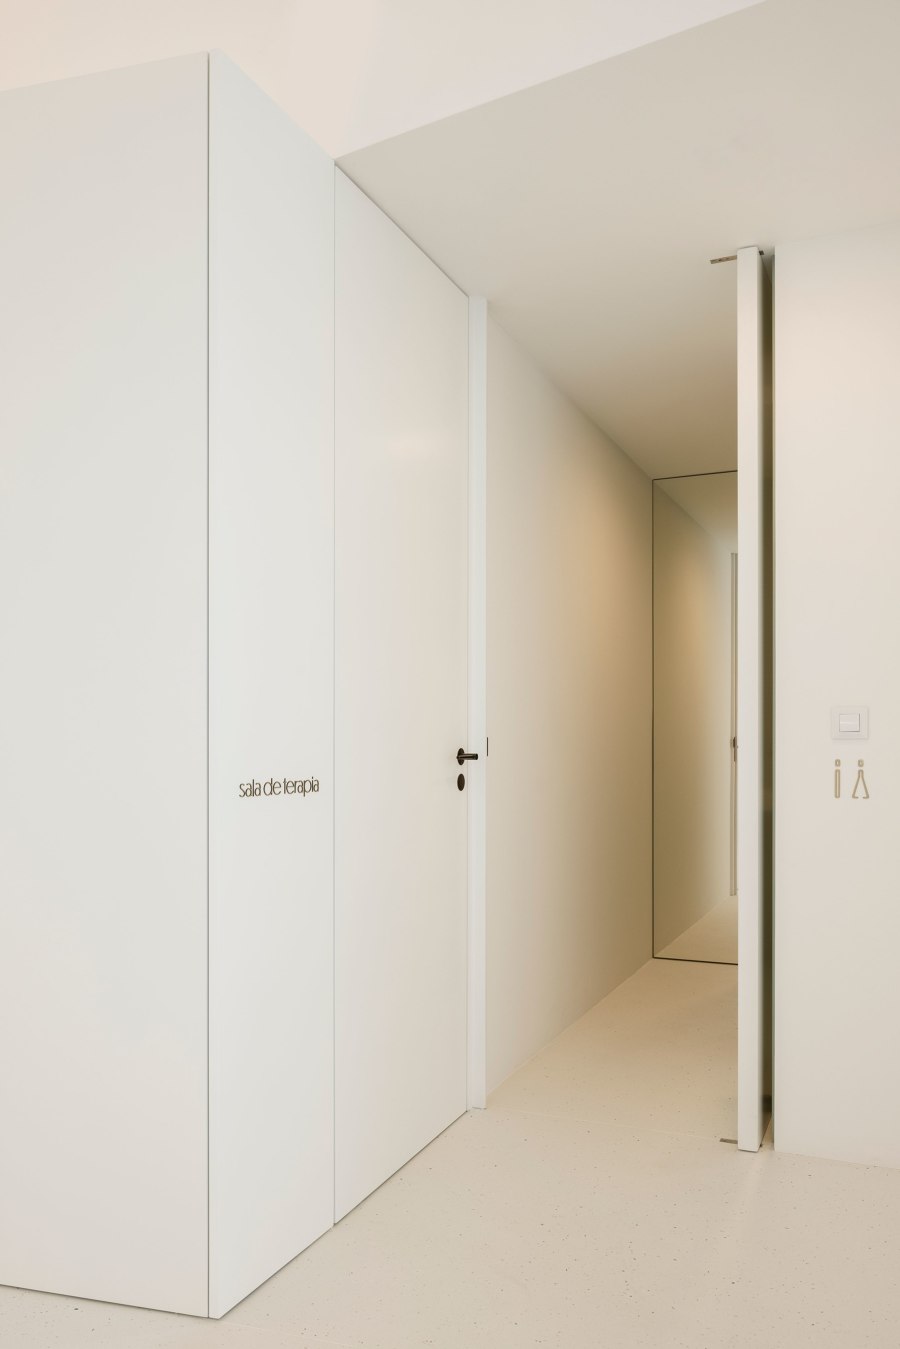 Think Health naturopatia de box: arquitectos associados | Cabinets